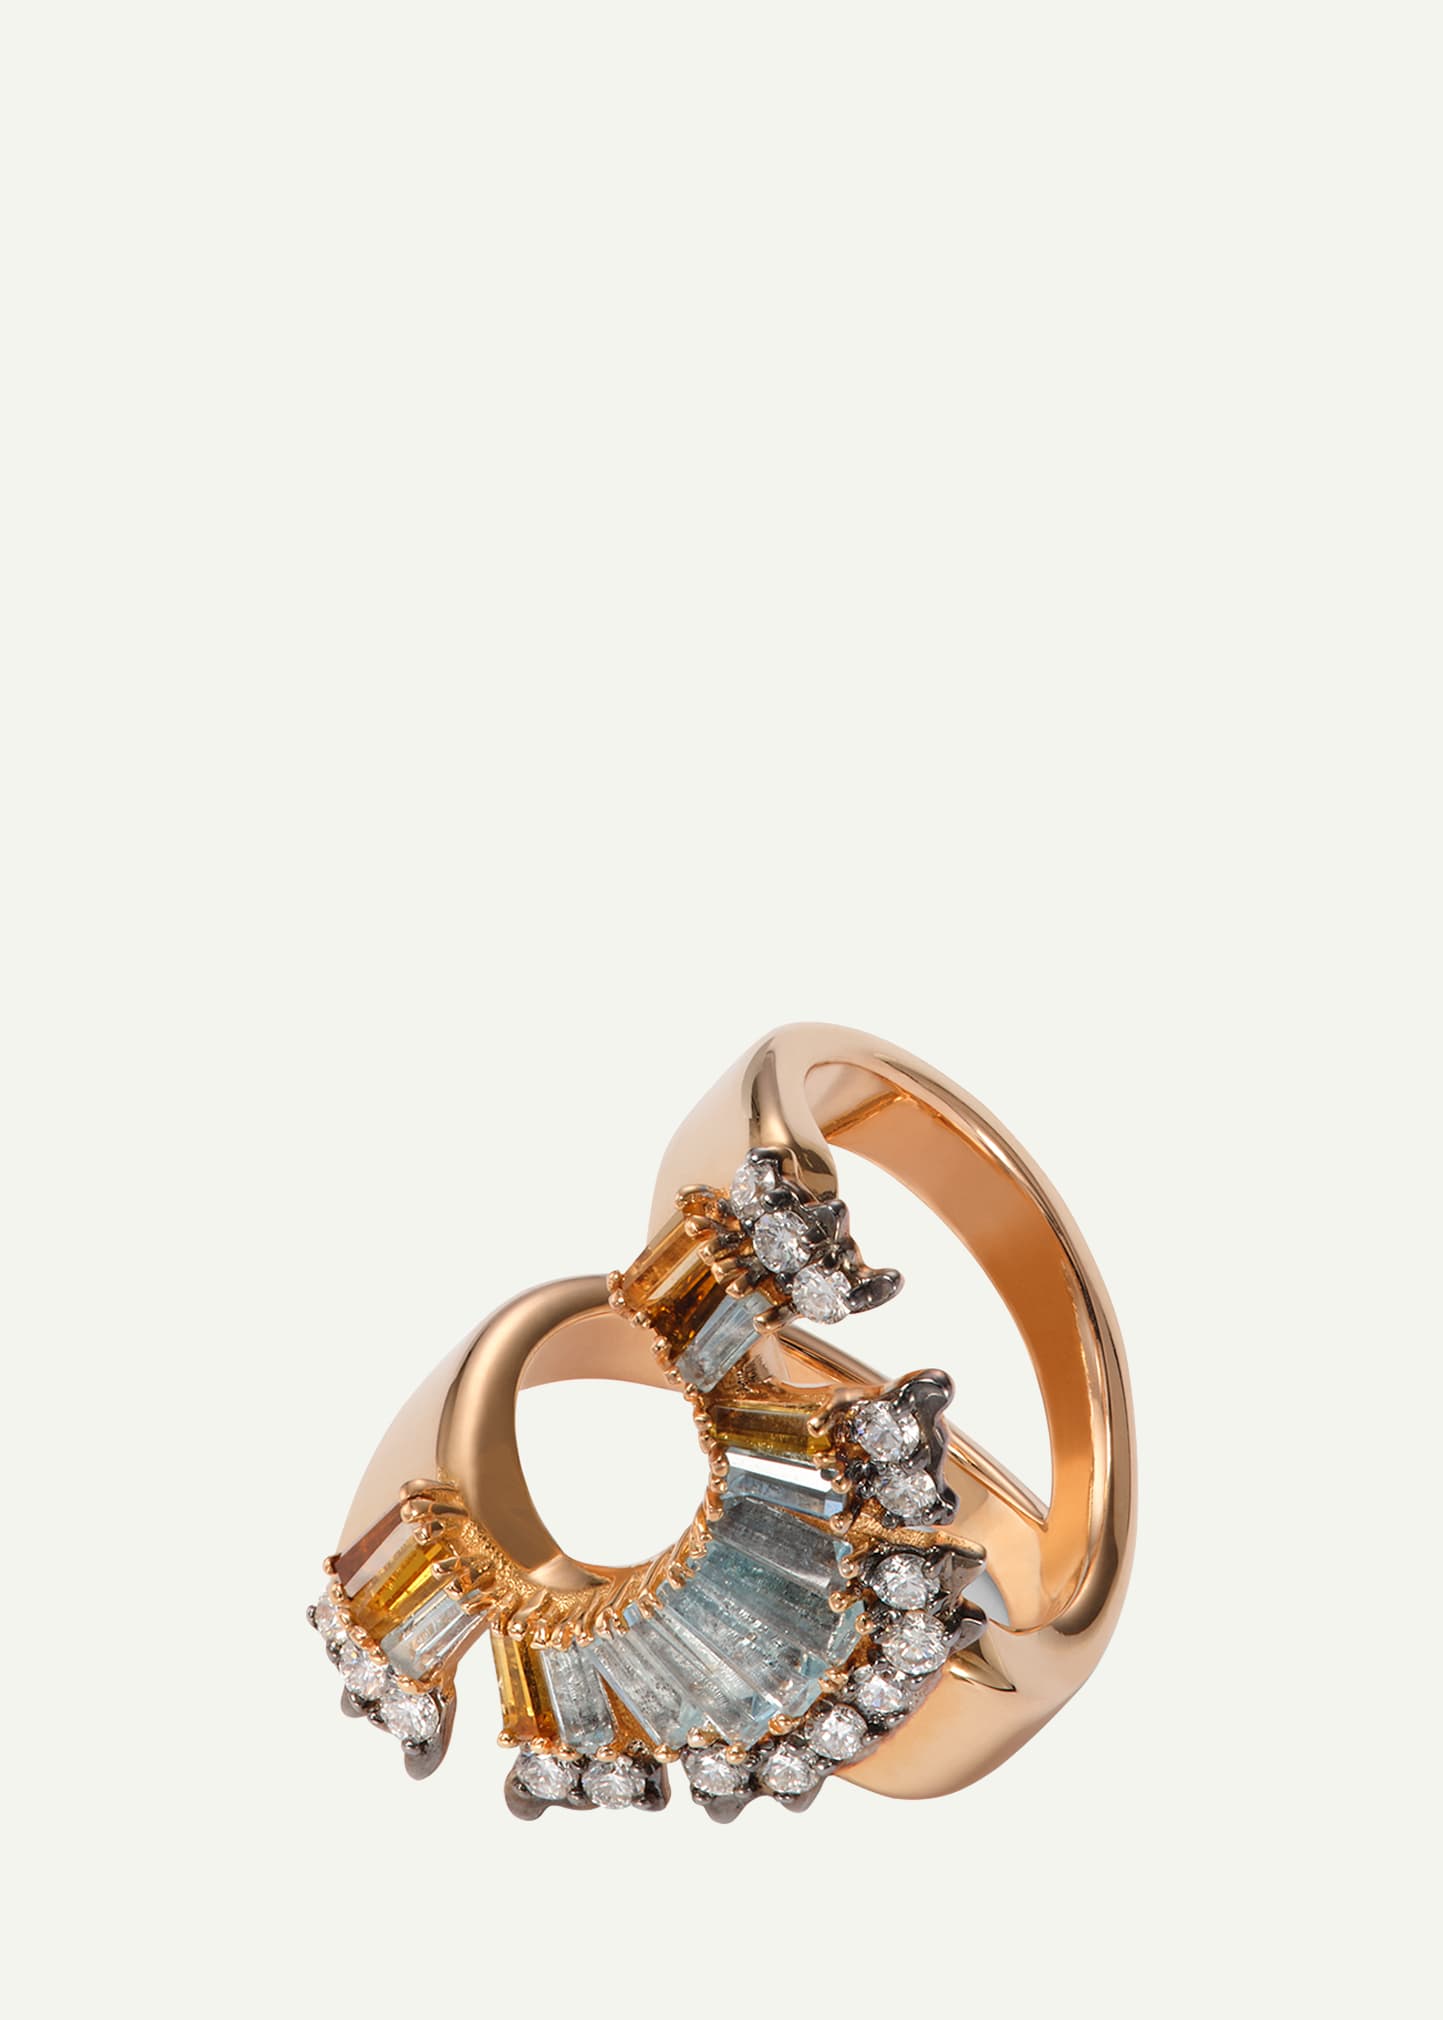 20K Rose Gold C Ruched Ring with White Diamonds, Aquamarine and Golden Tourmaline